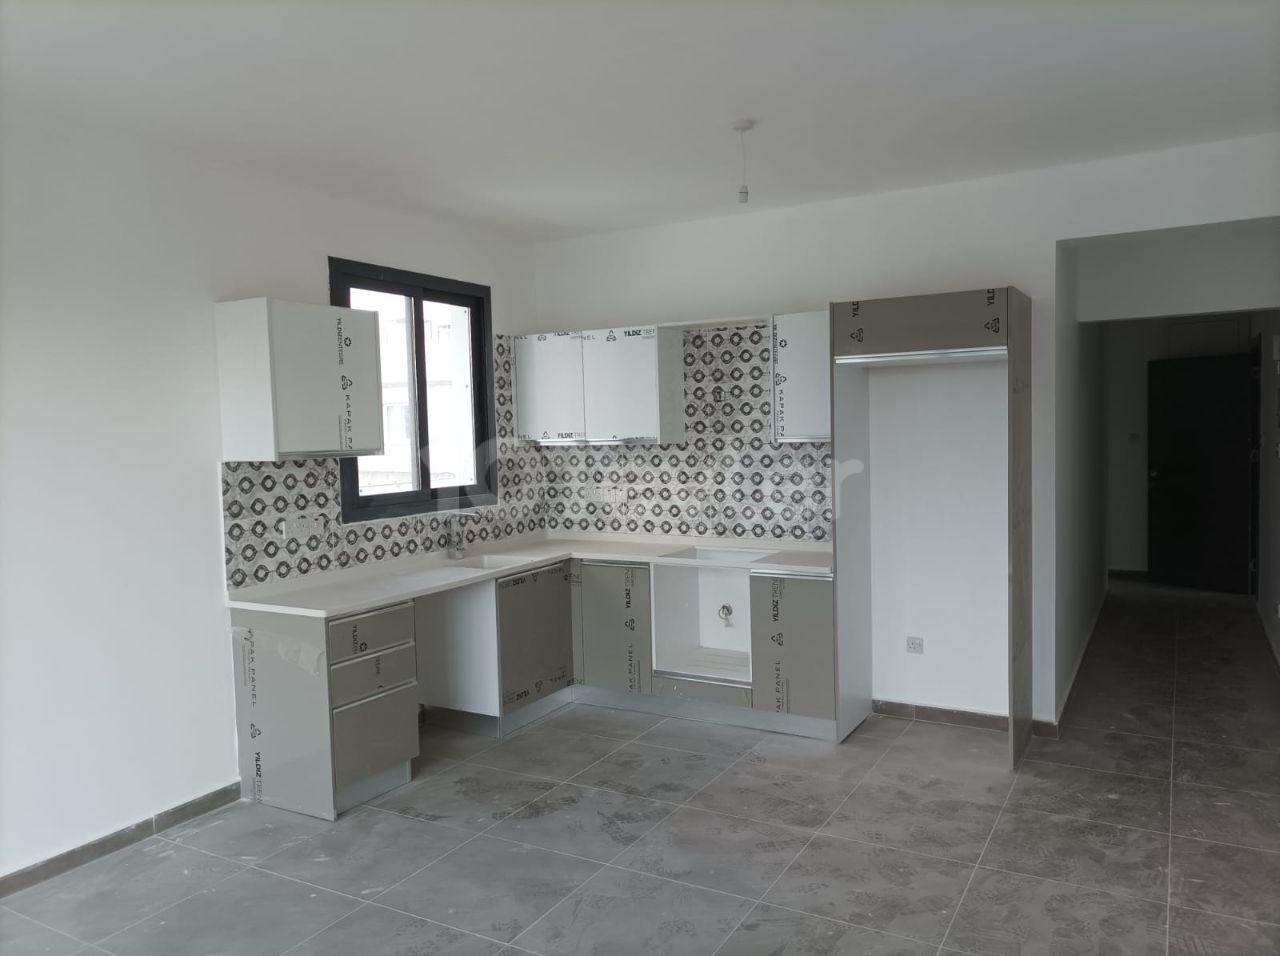 Opportunity 2+1 investment apartments centrally located in Küçük kaymaklı region